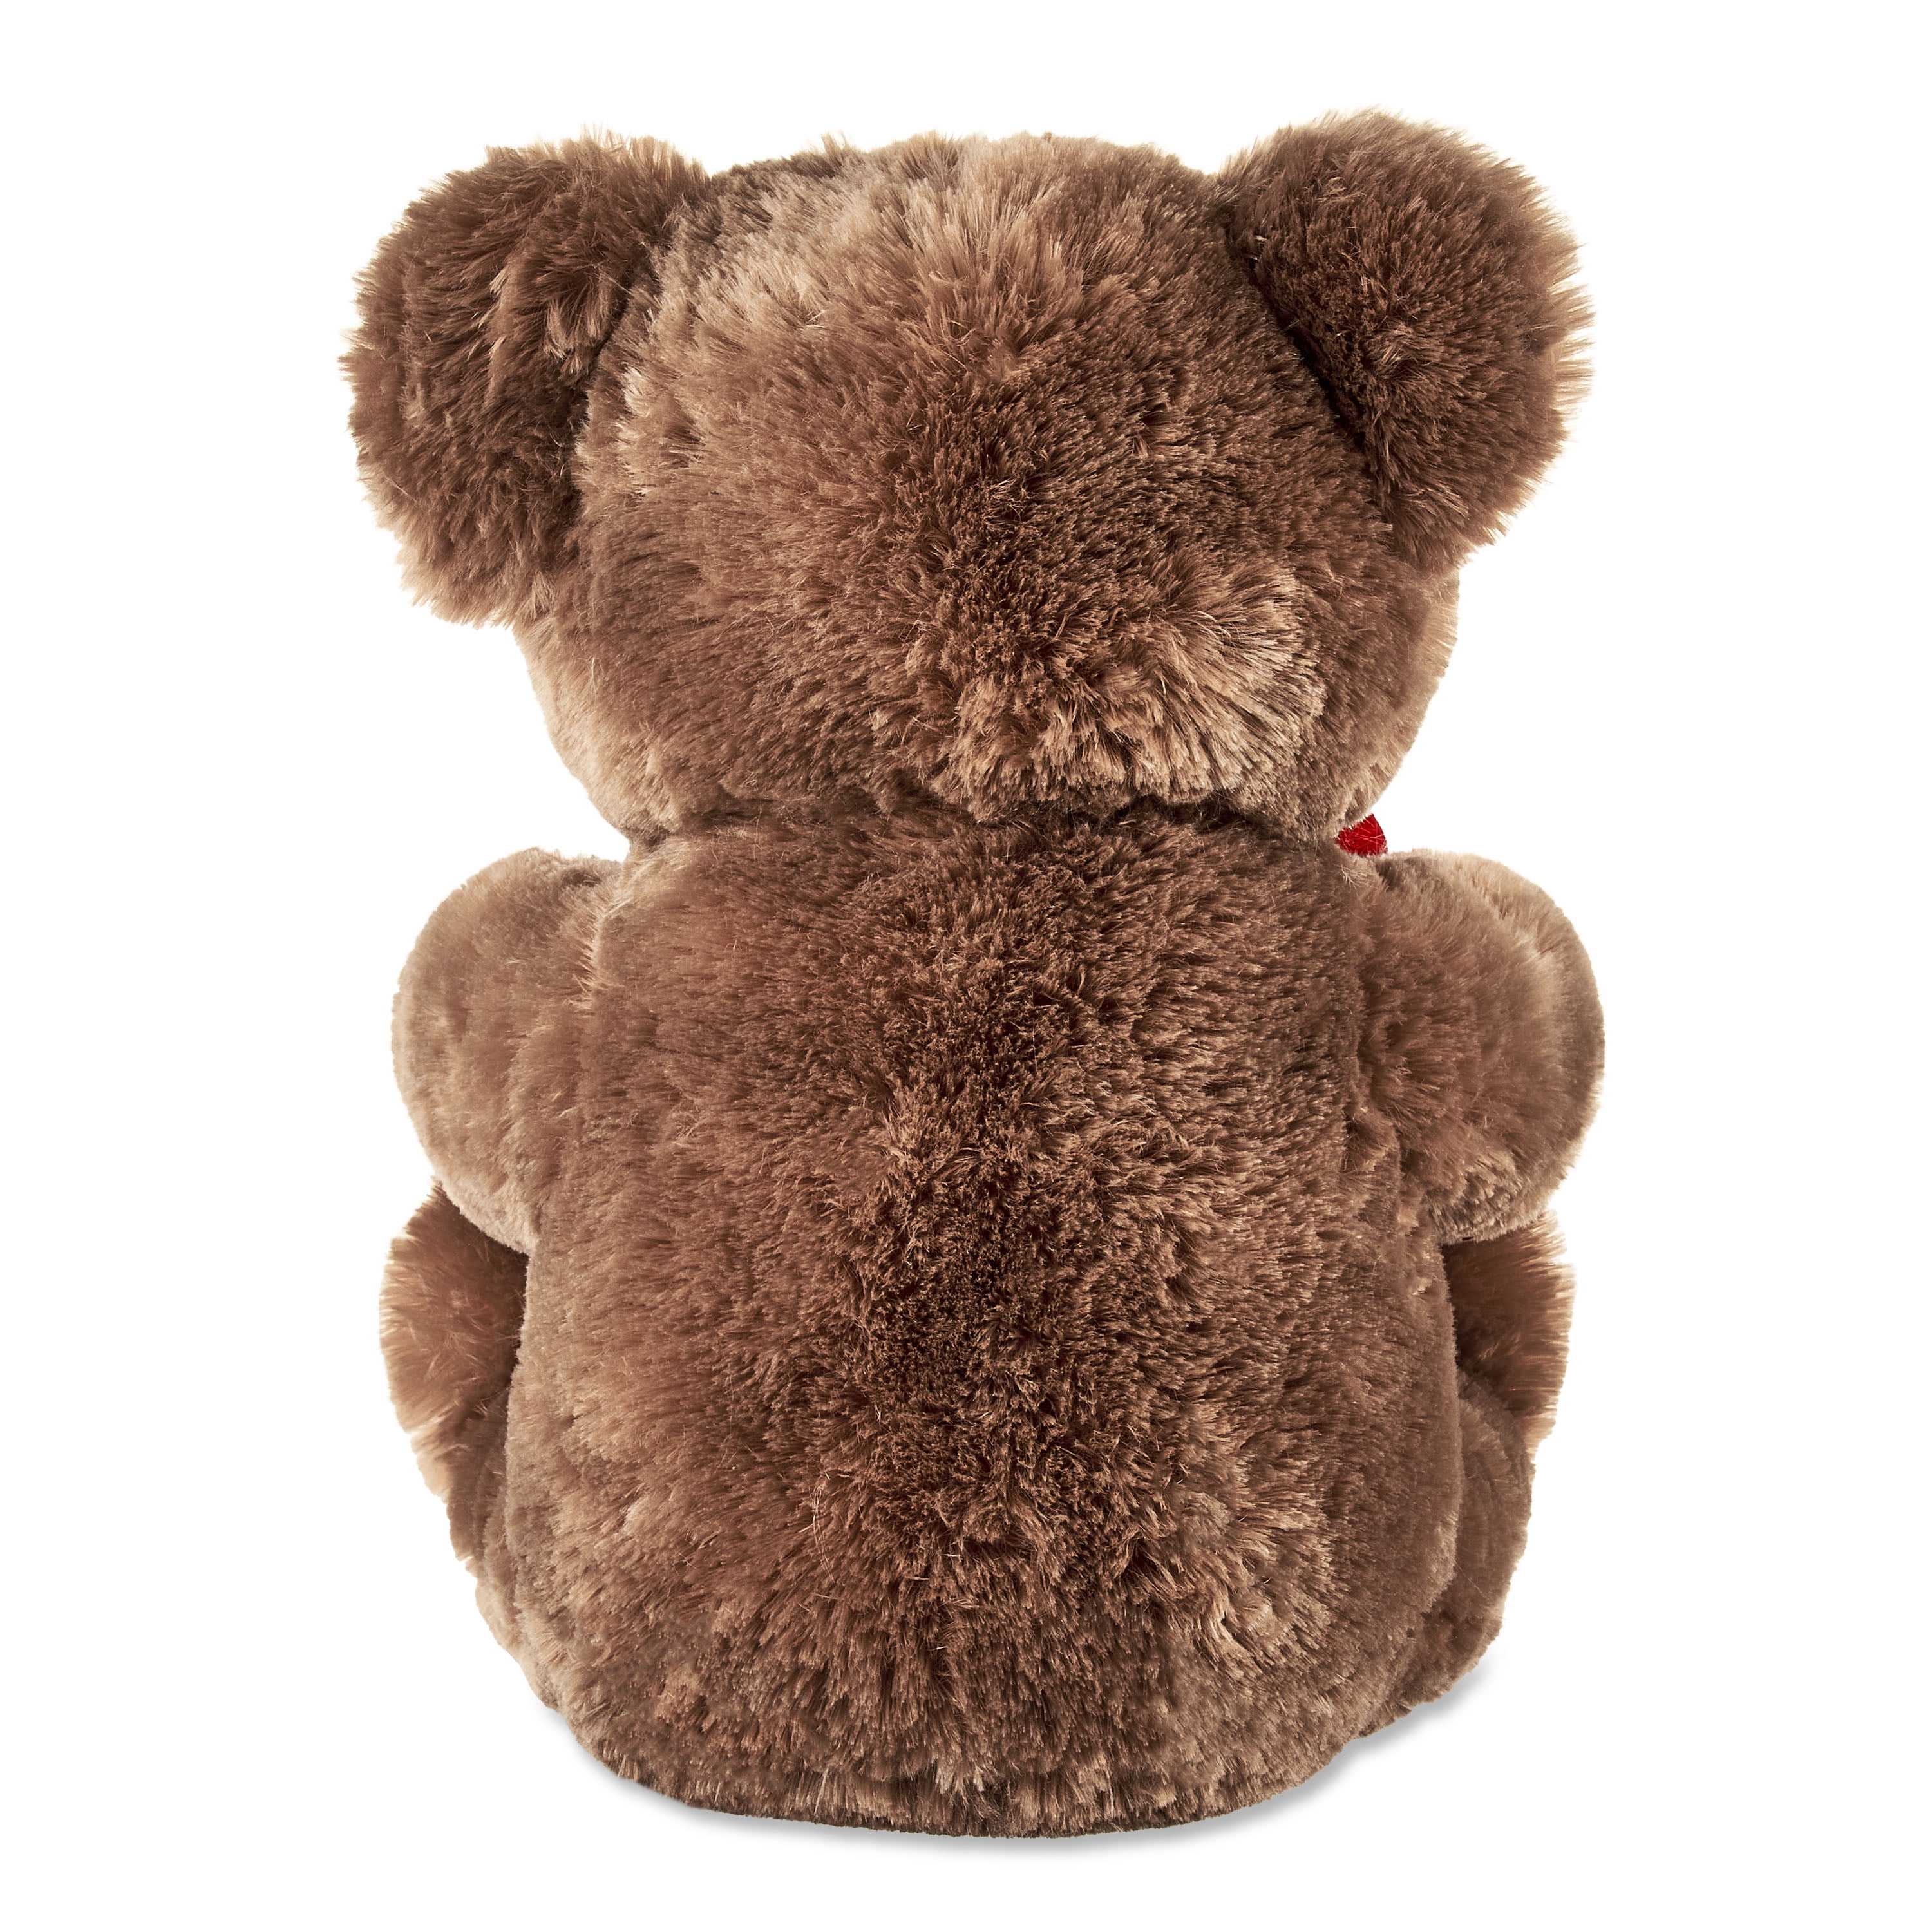 Sweety Toys 6342 Valentine Teddy Je t'aime Je t'aime ours en peluc